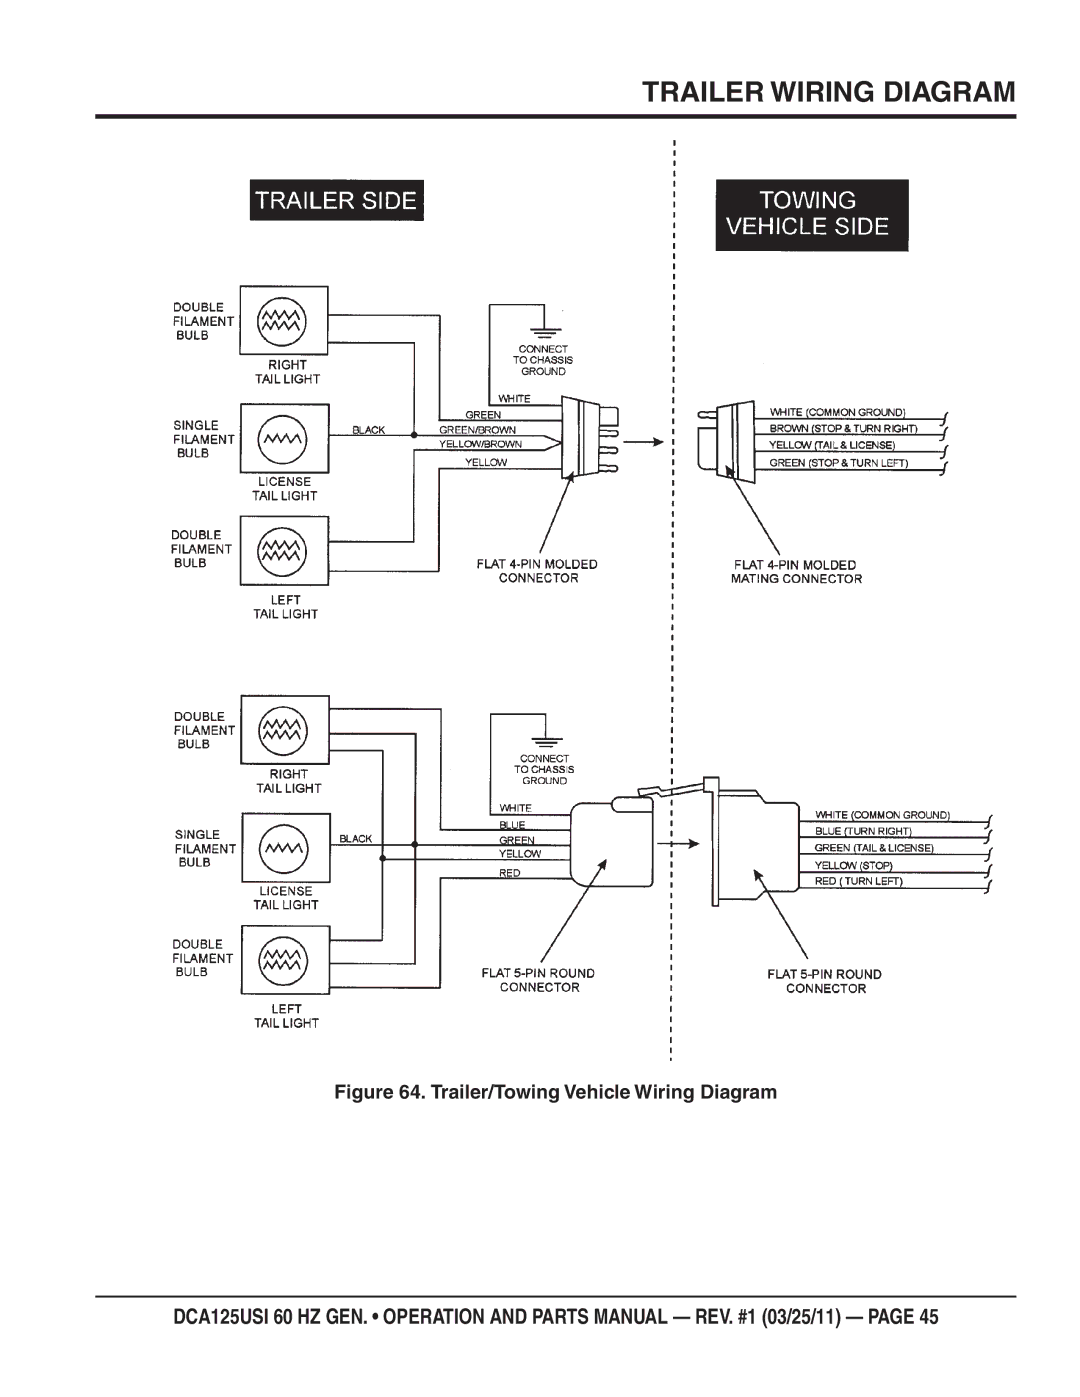 Multiquip DCA125USI manual Trailer Wiring Diagram, Trailer/Towing Vehicle Wiring Diagram 